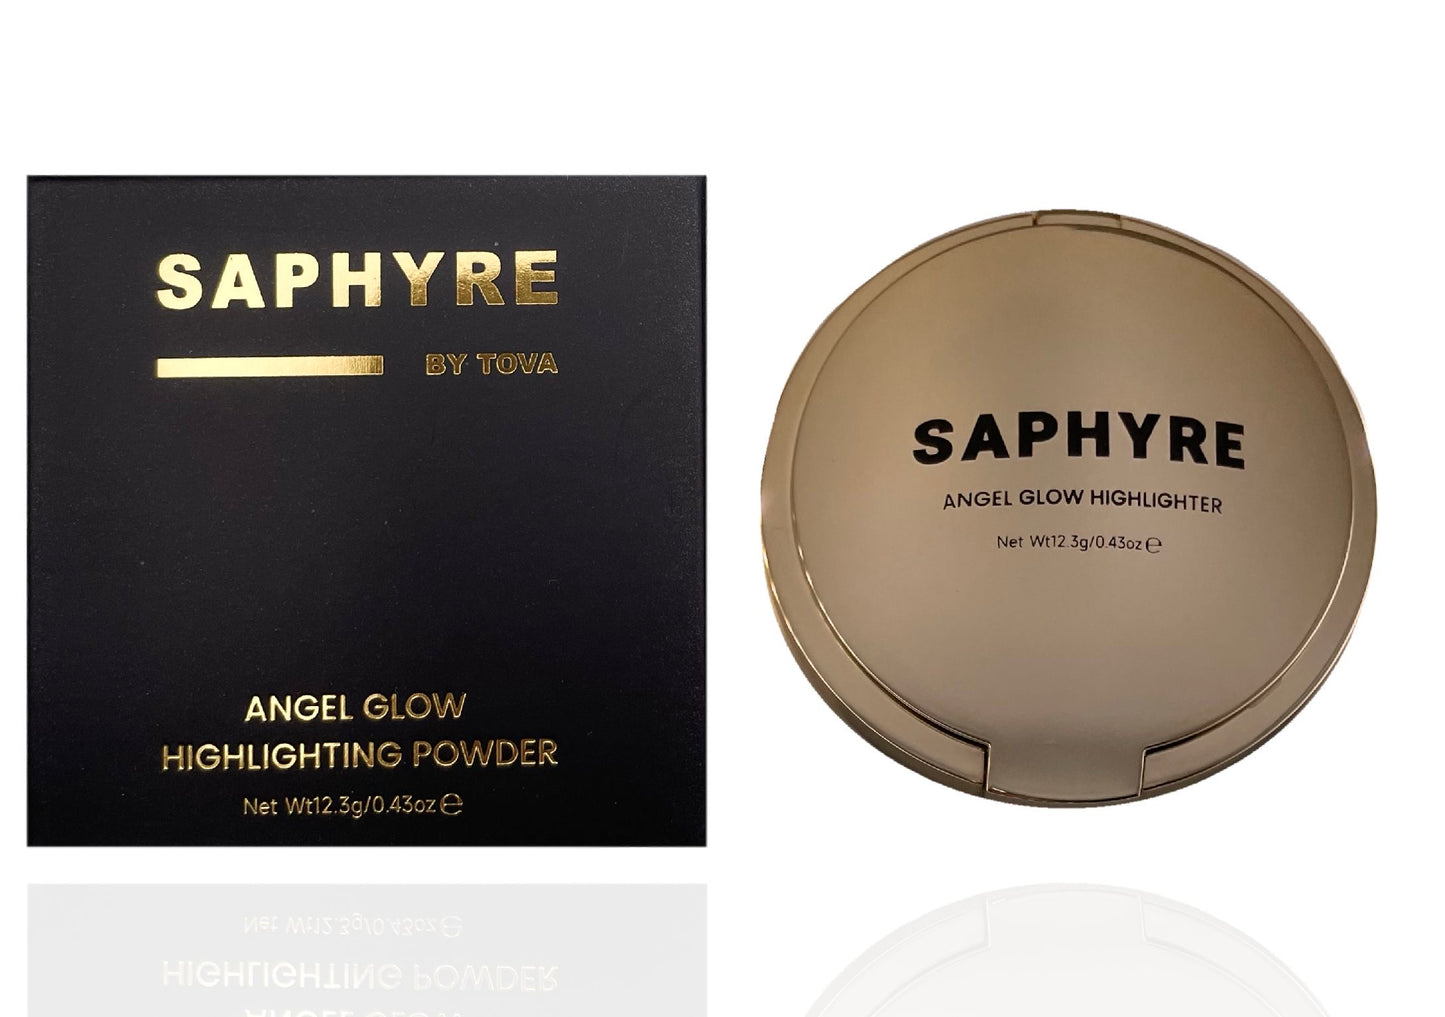 Saphyre by Tova Angel Glow Highlighting Powder KFP